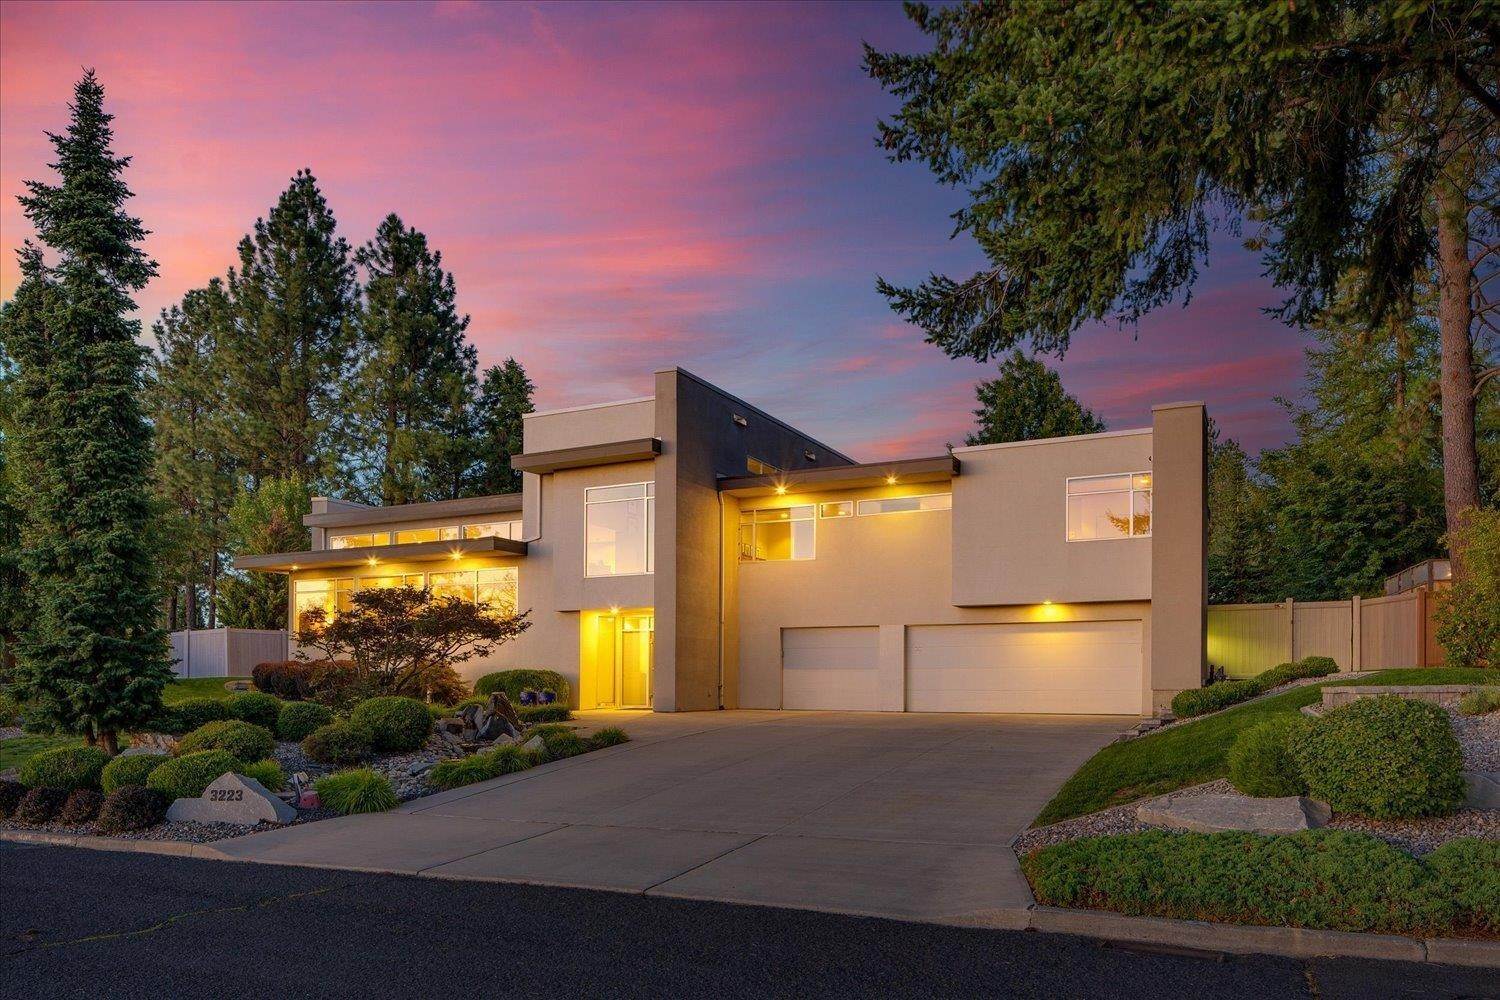 Single Family Homes for Sale at 3223 S High Drive Spokane, Washington 99203 United States